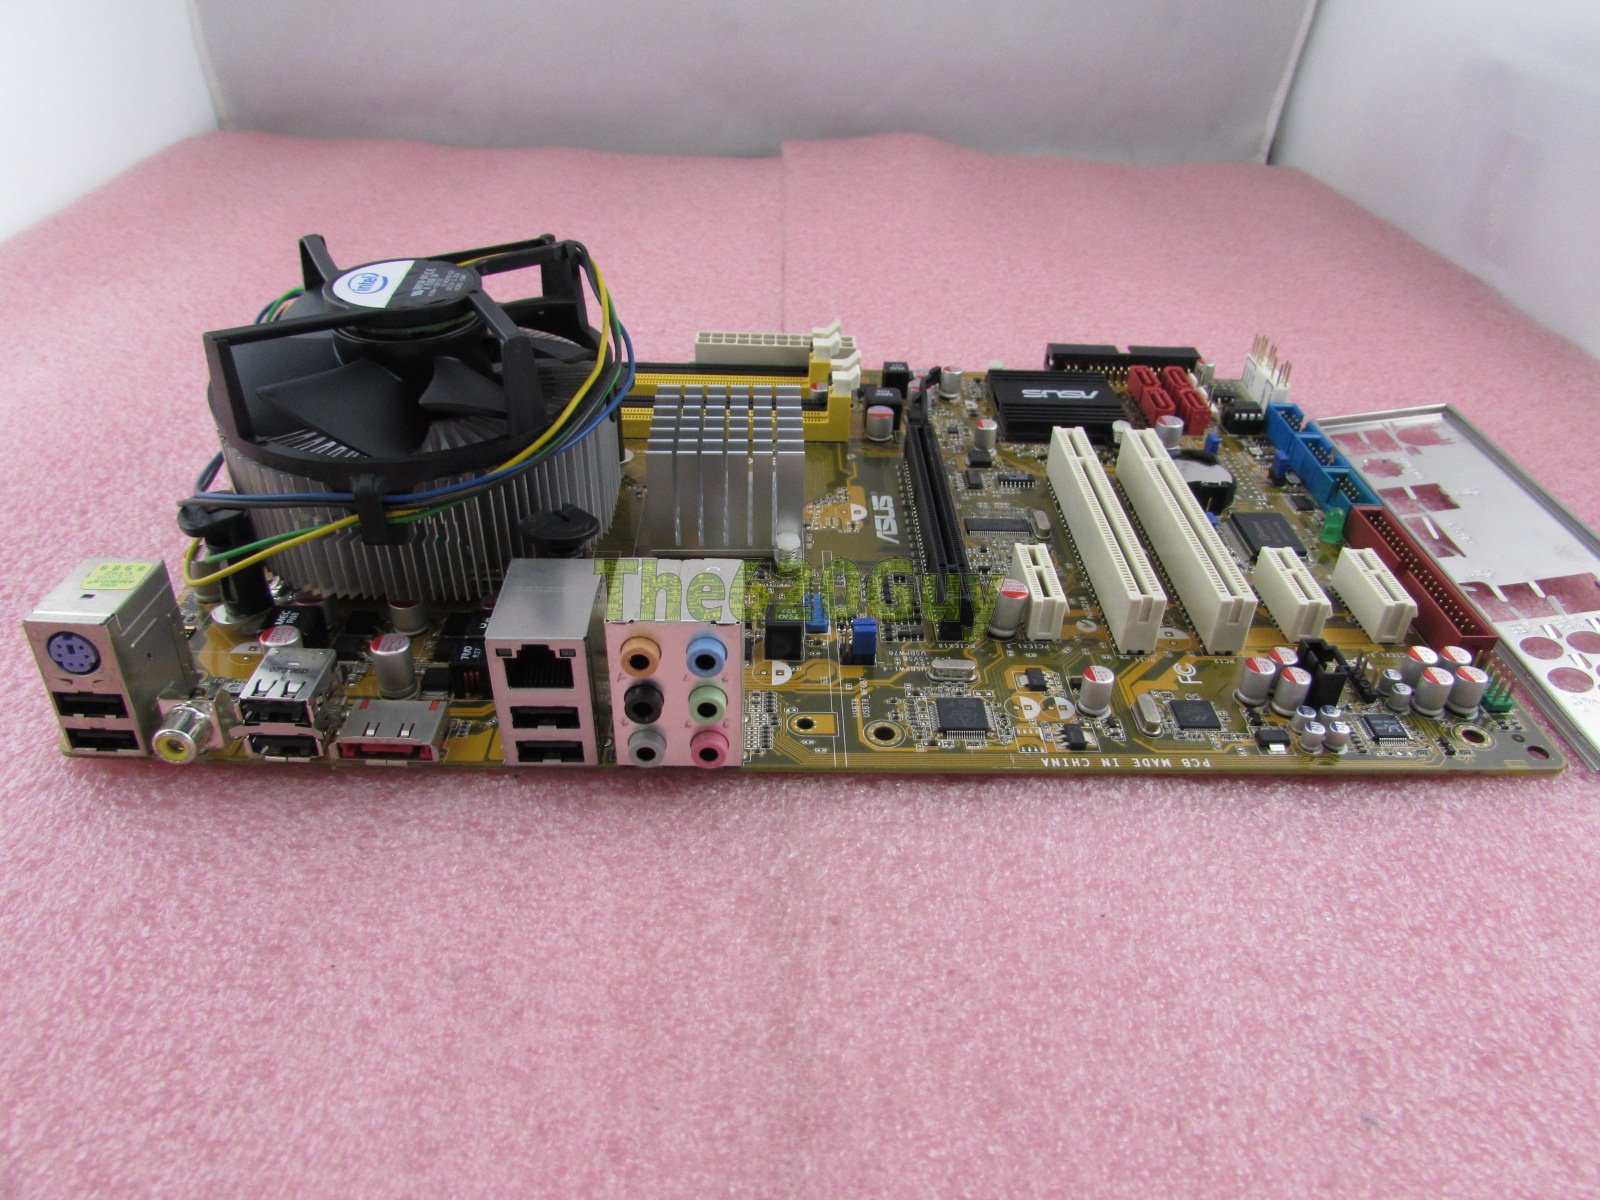 Asus P5K SE REV 1.00G Motherboard + Core 2 Quad Q6600 2.4GHz CPU + HSF